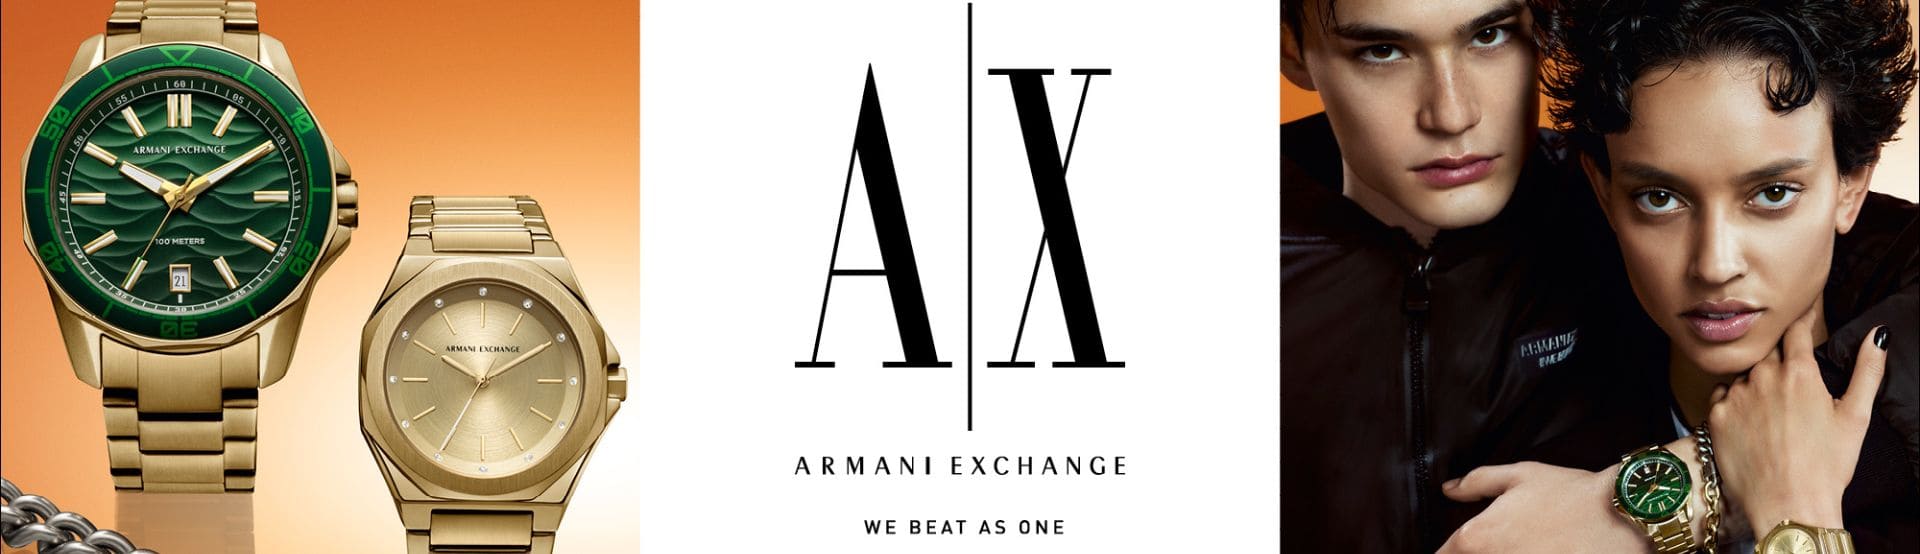 Original Armani Watch Exchange AX1335 | Watches Catchy